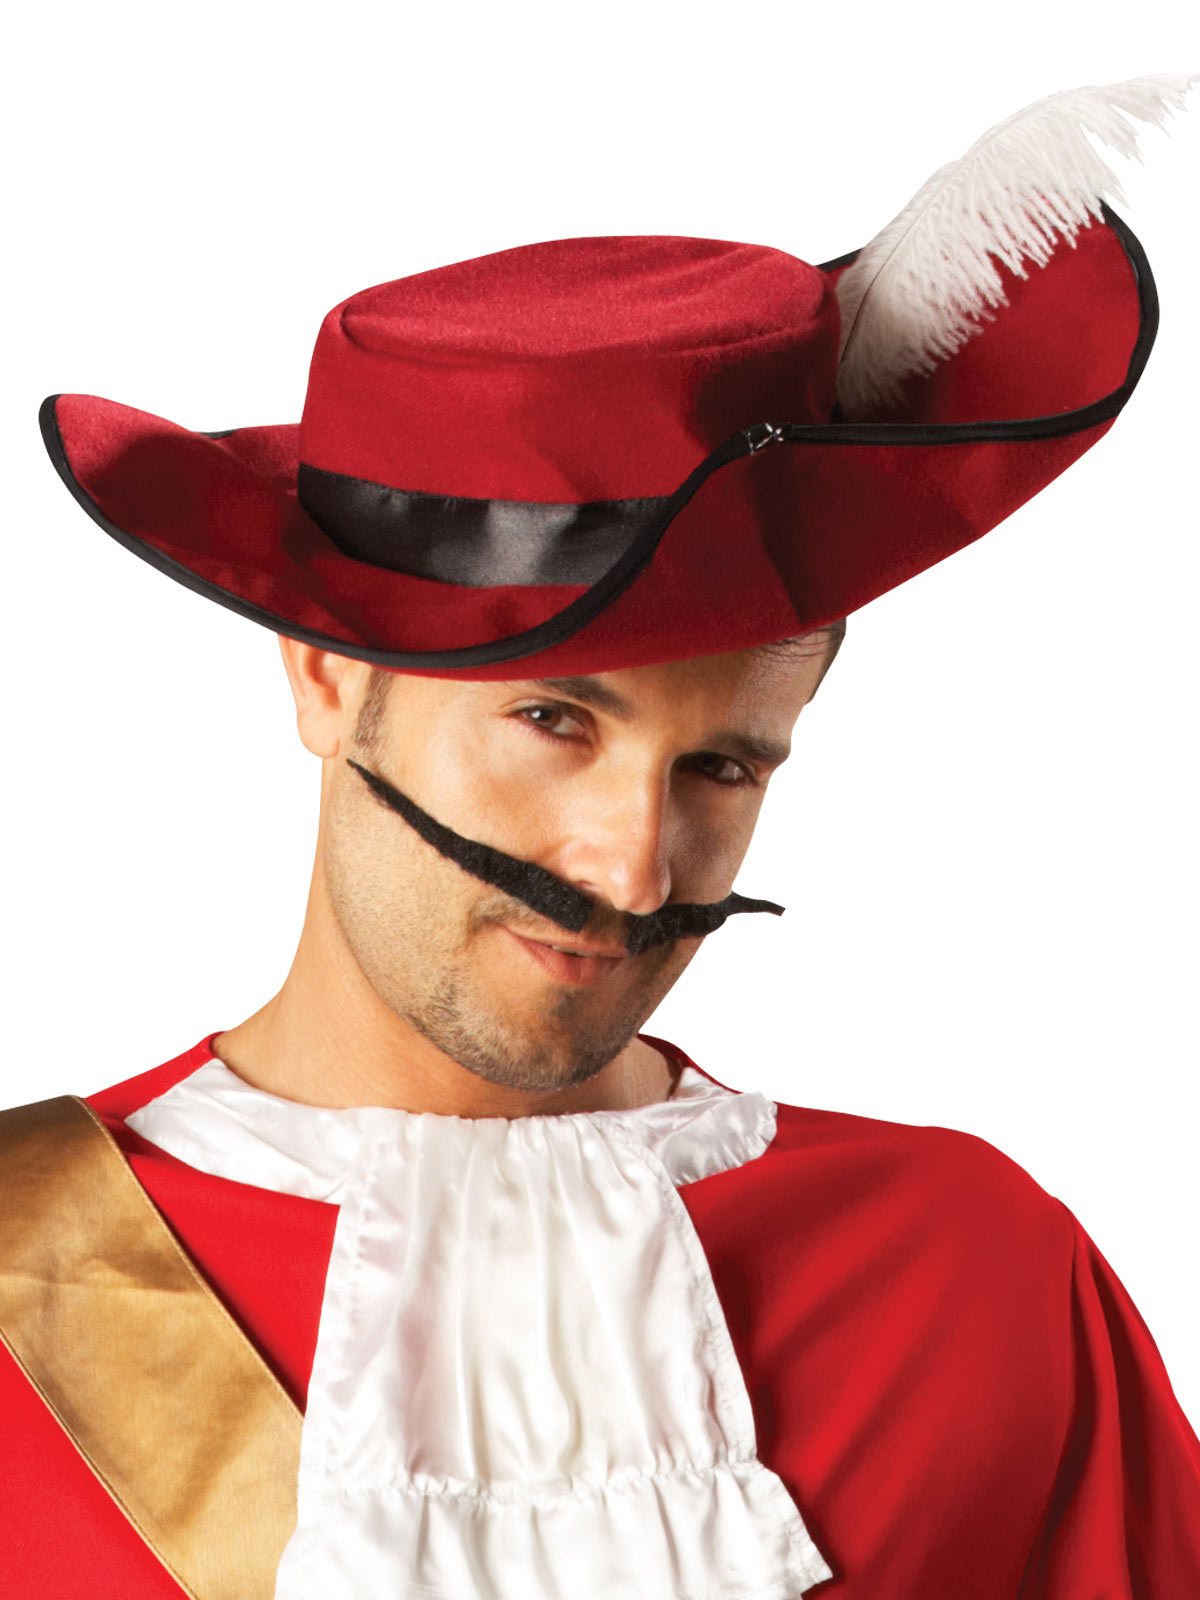 Captain Hook Costume for Adults - Disney Peter Pan